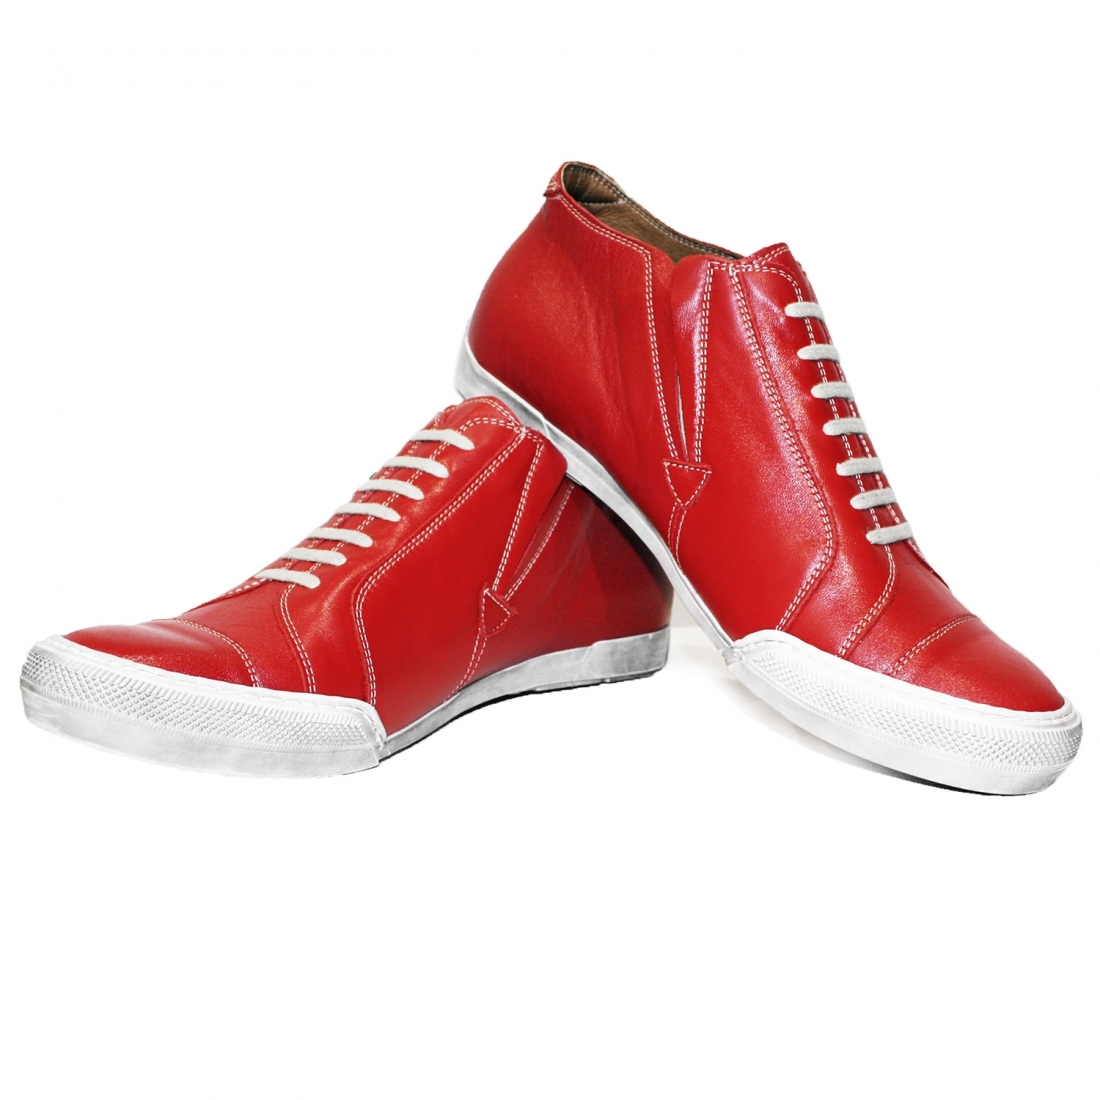 Modello Rednoise - Scarpe Casual - Handmade Colorful Italian Leather Shoes